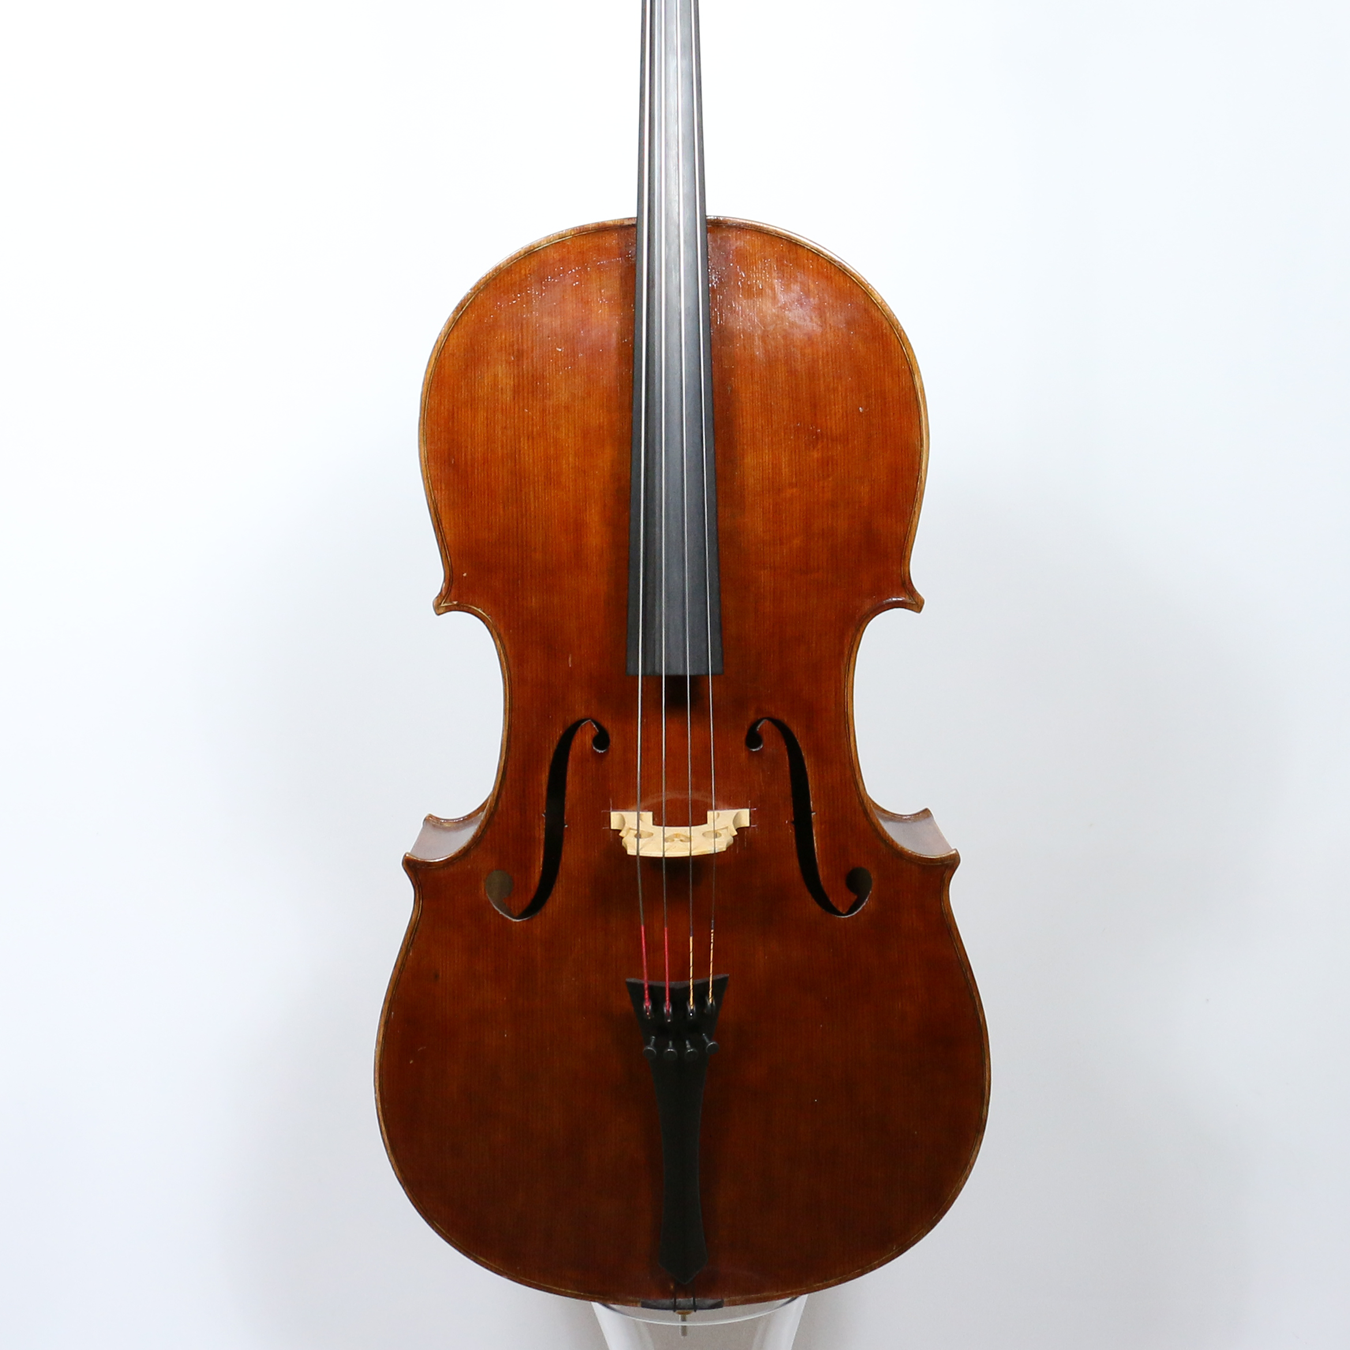 German Master cello by Wenzl Fuchs